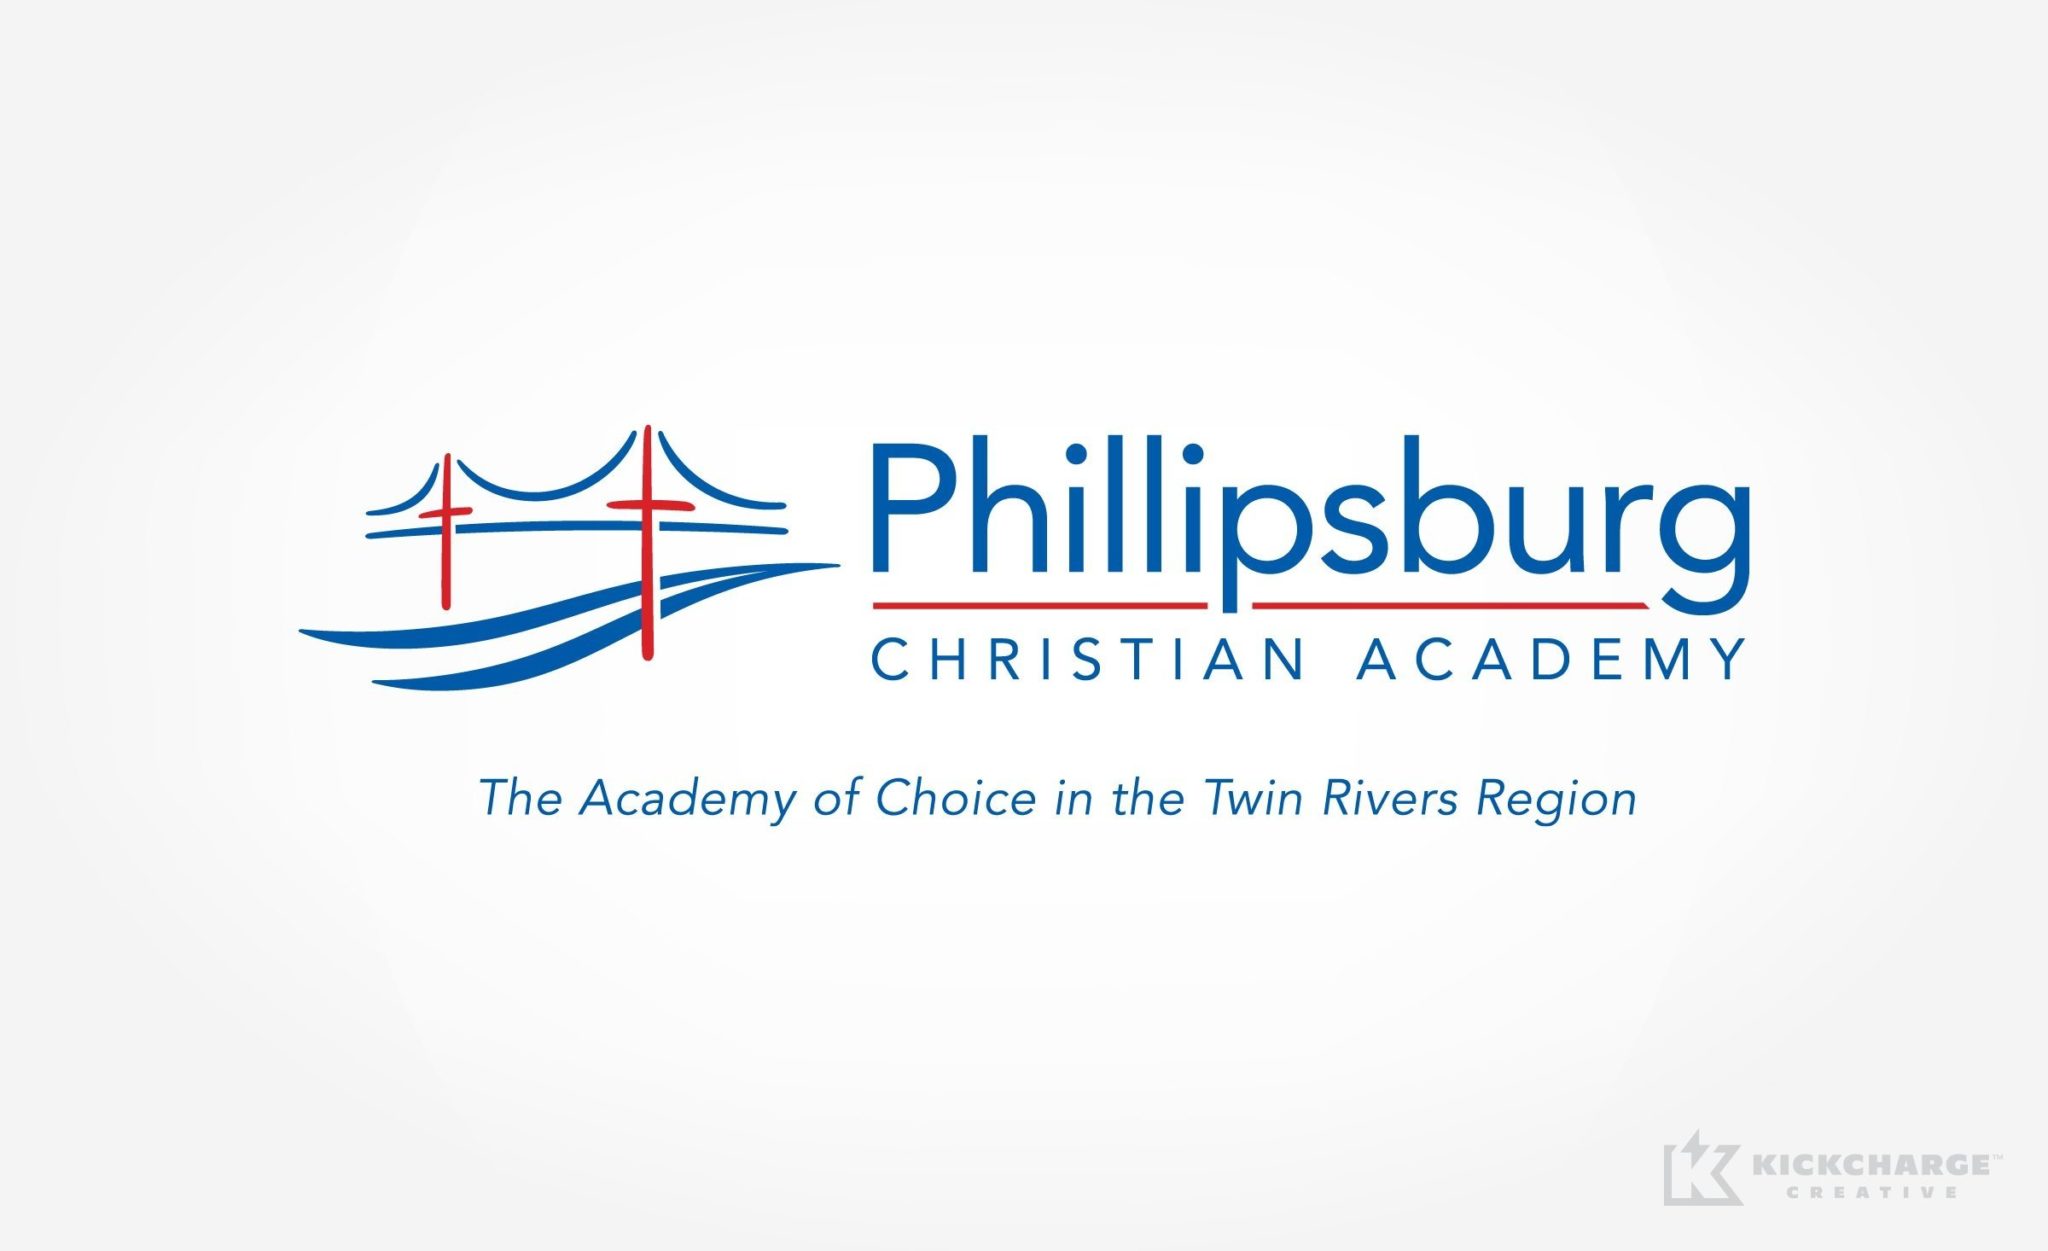 Phillipsburg Christian Academy